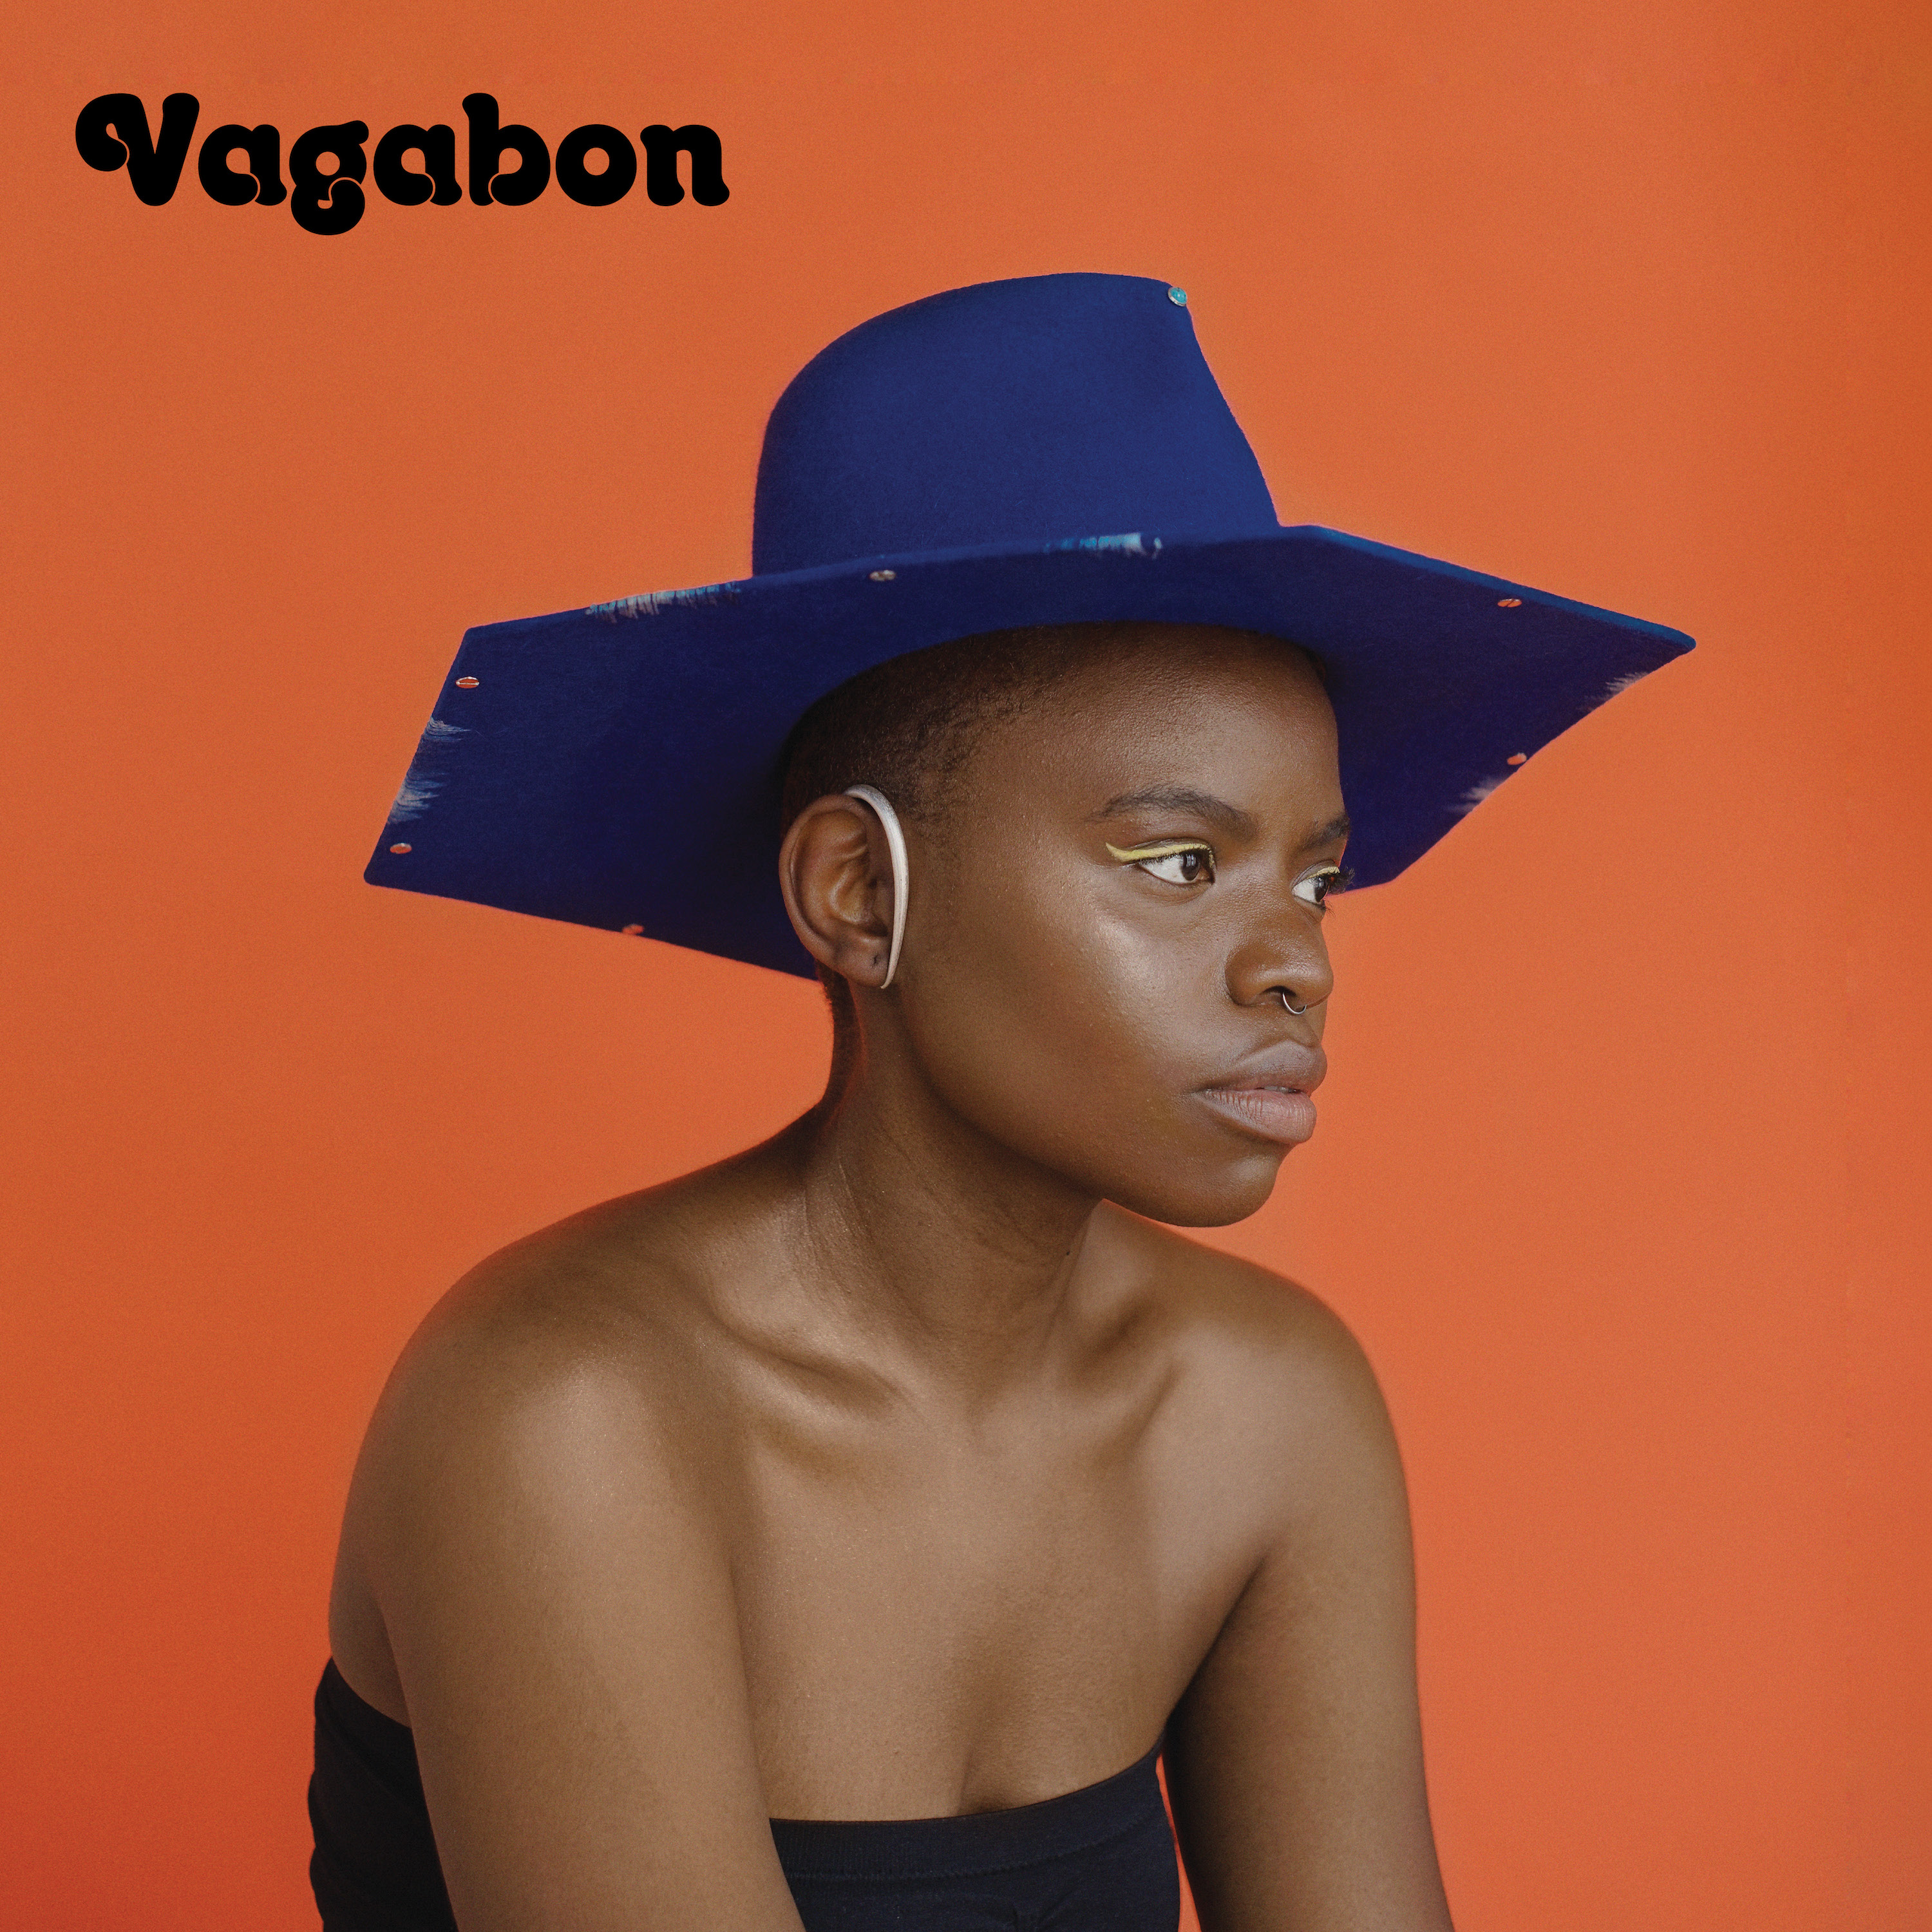 VAGABON ANNOUNCES SELF-TITLED SOPHOMORE ALBUM OUT OCTOBER 18th VIA NONESUCH RECORDS